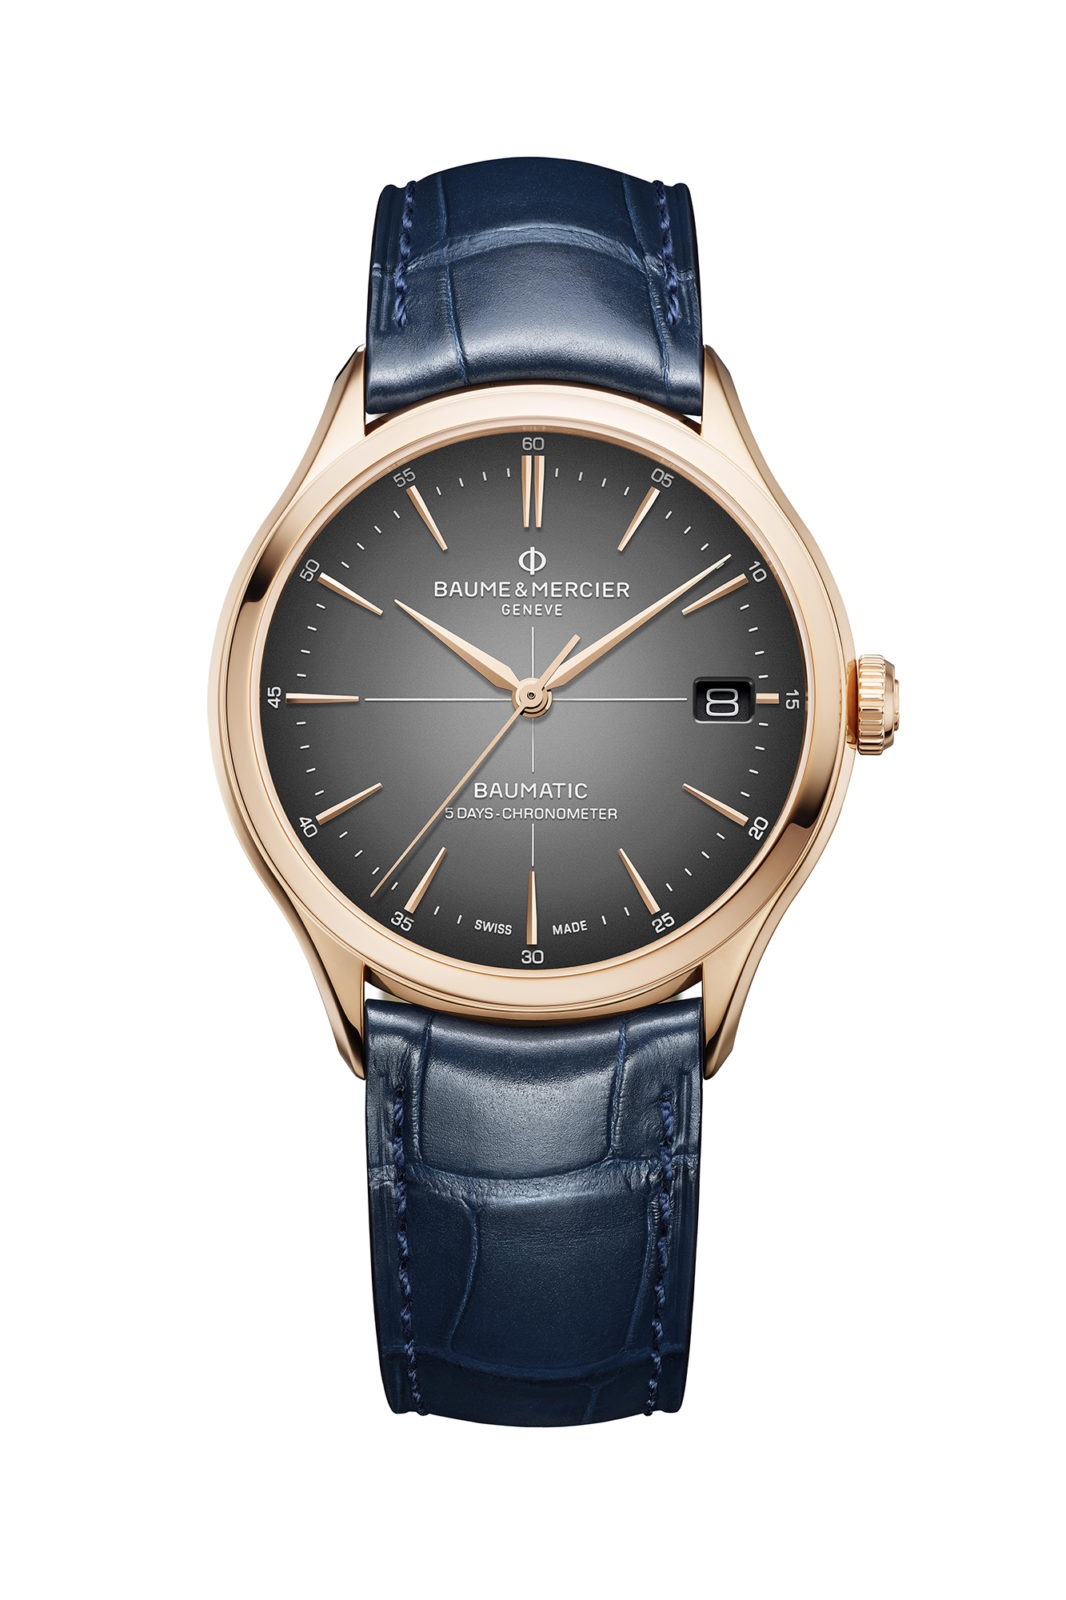 Baume & Mercier Watches & Wonders 2020 - Baumatic Cosc